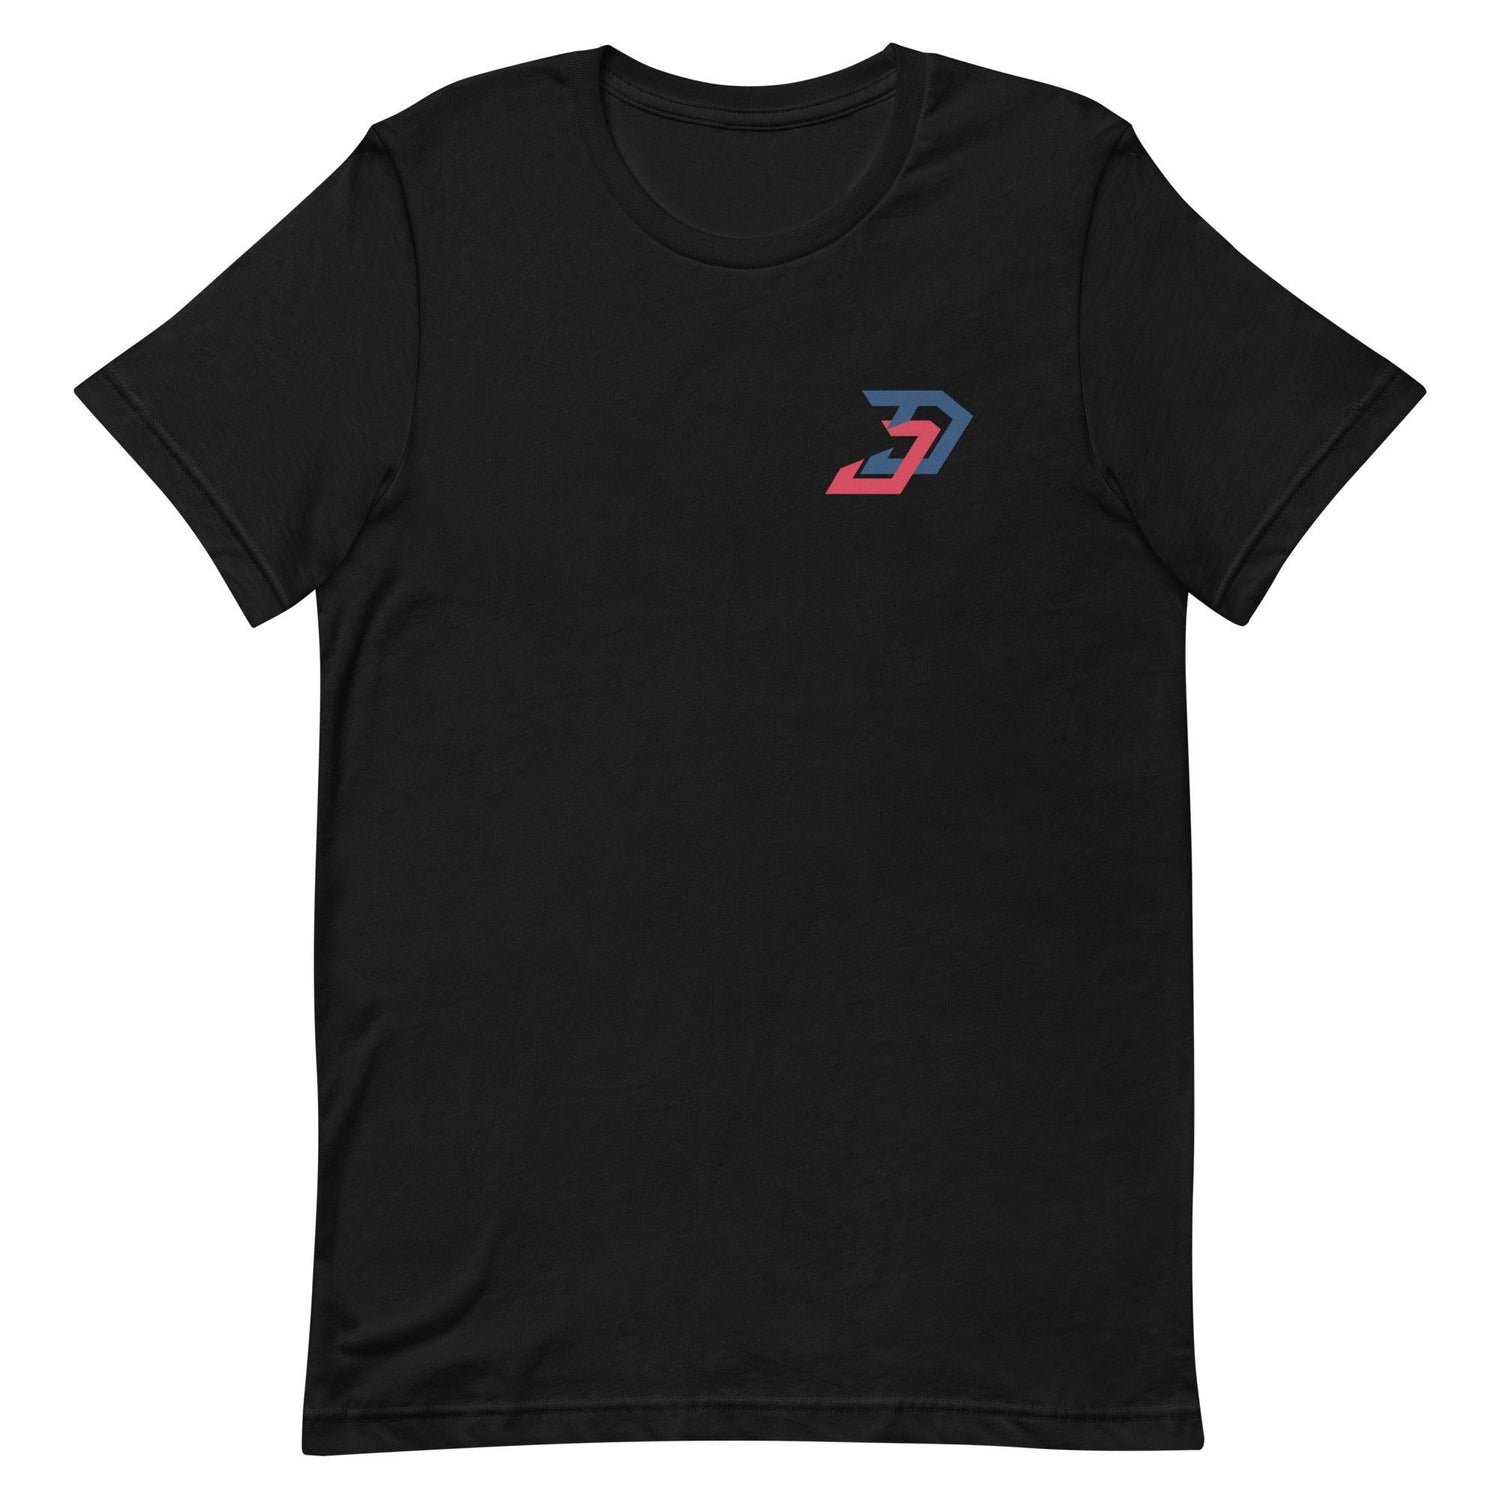 Jack DeGroat “Signature” t-shirt - Fan Arch